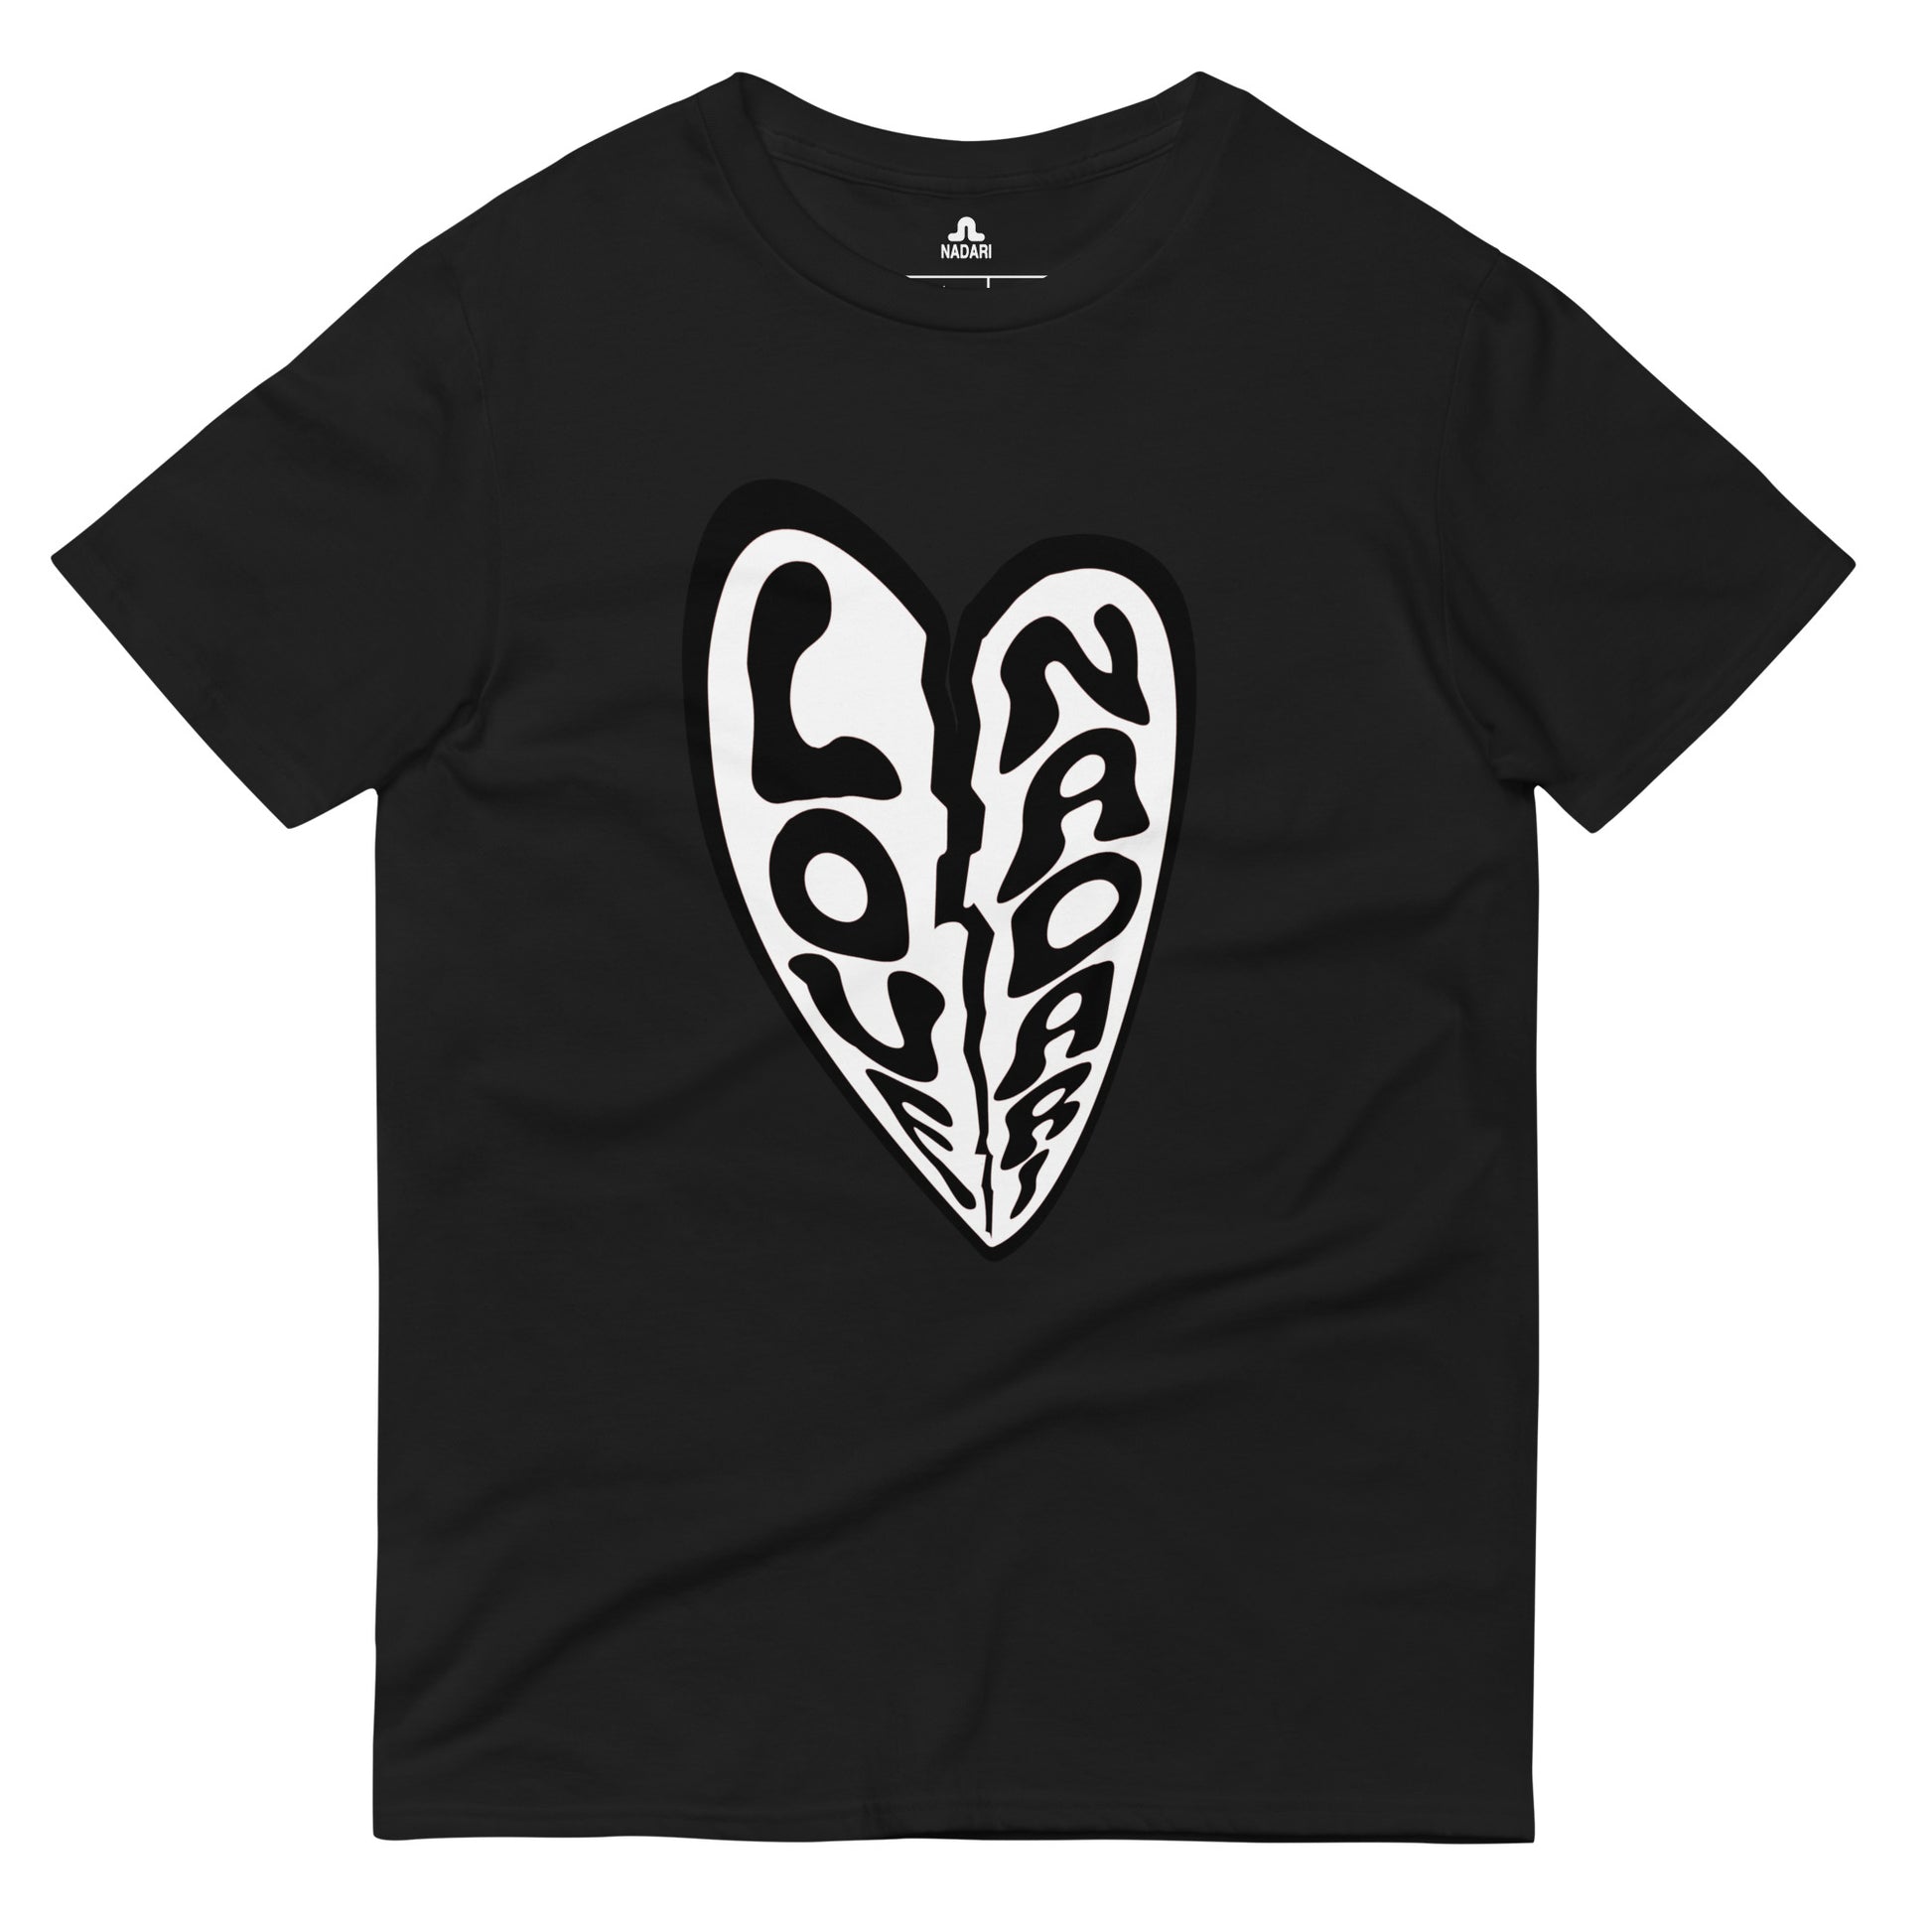 Nadari Legacy warped love t-shirt black and white.